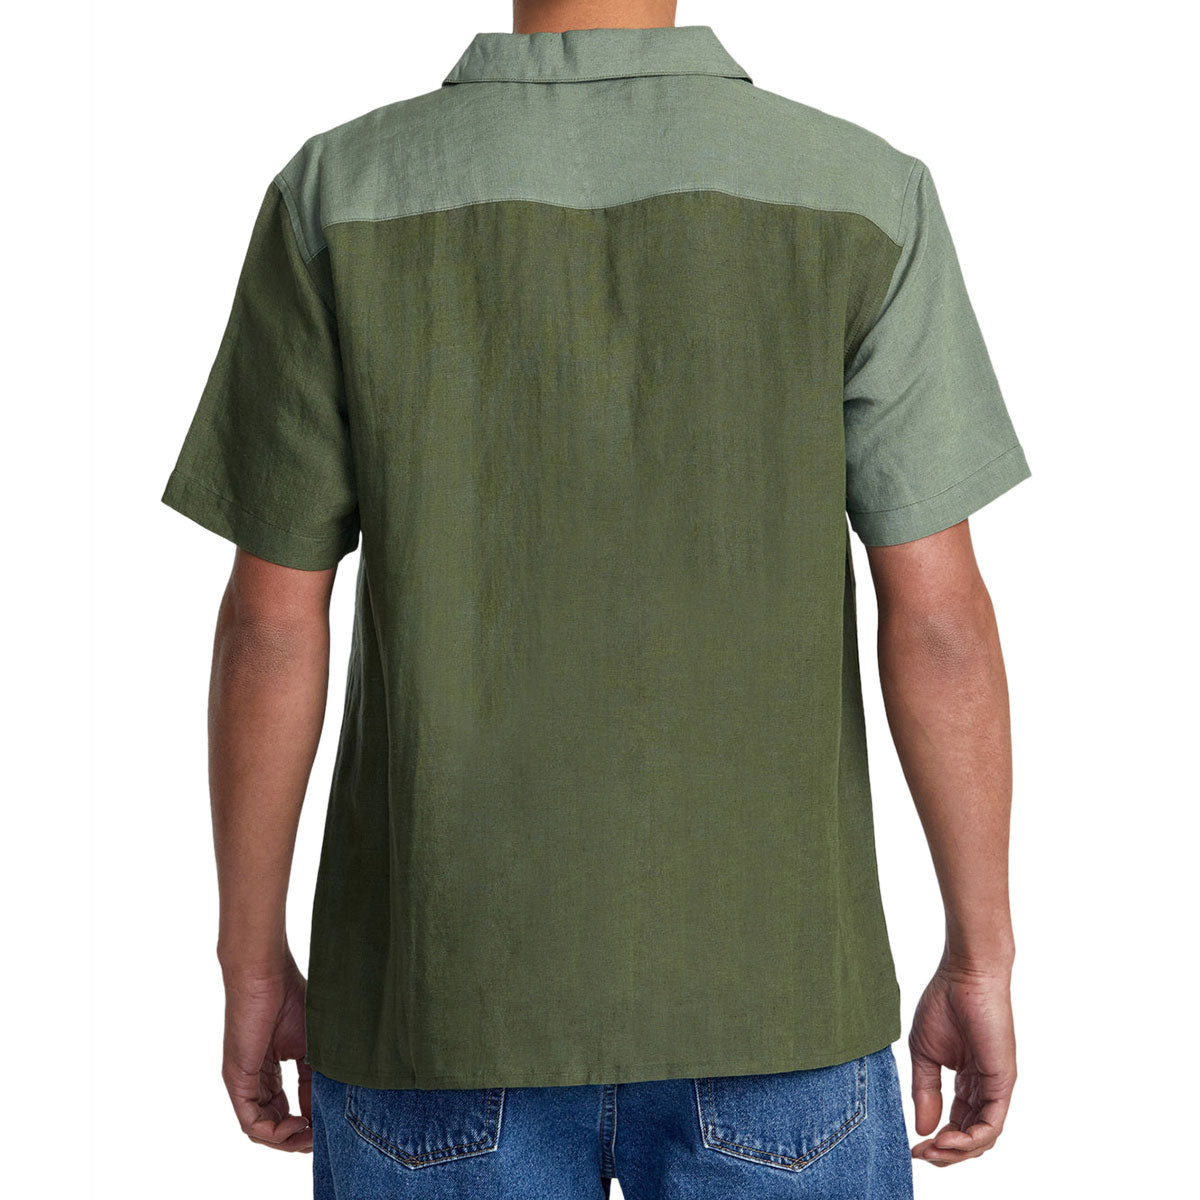 RVCA Vacancy Shirt - Surplus image 2